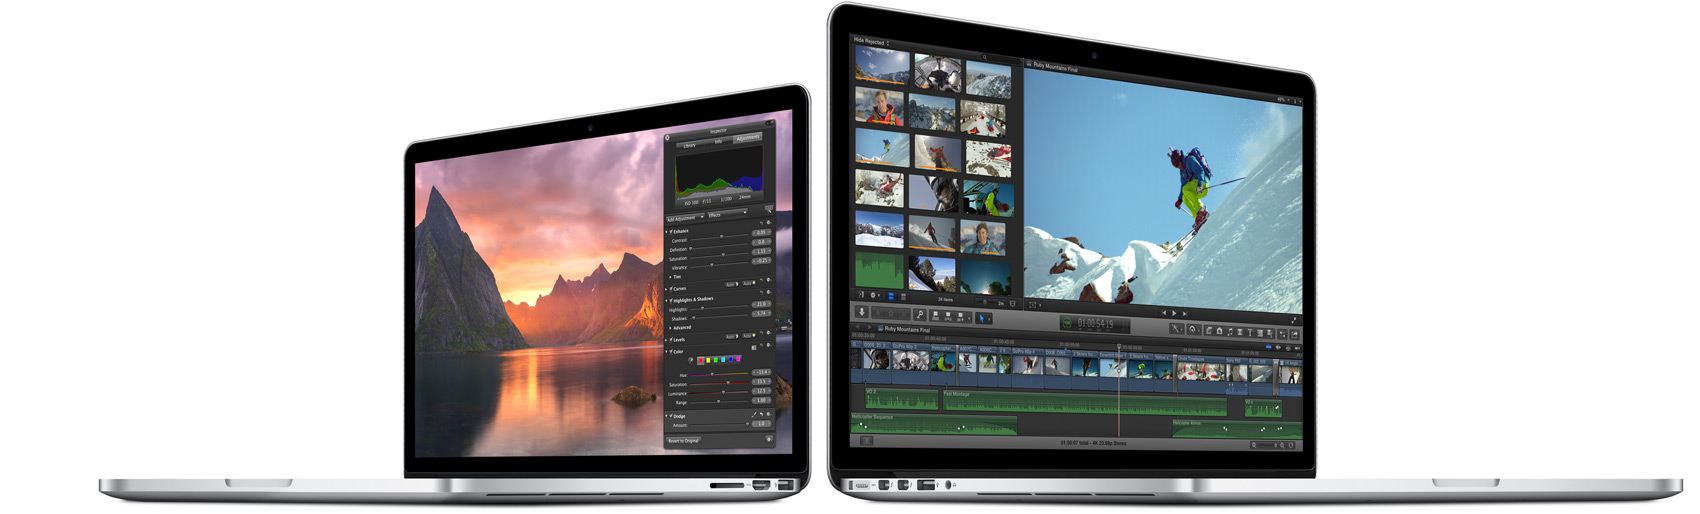 New 15 inch 2015 MacBook Pro